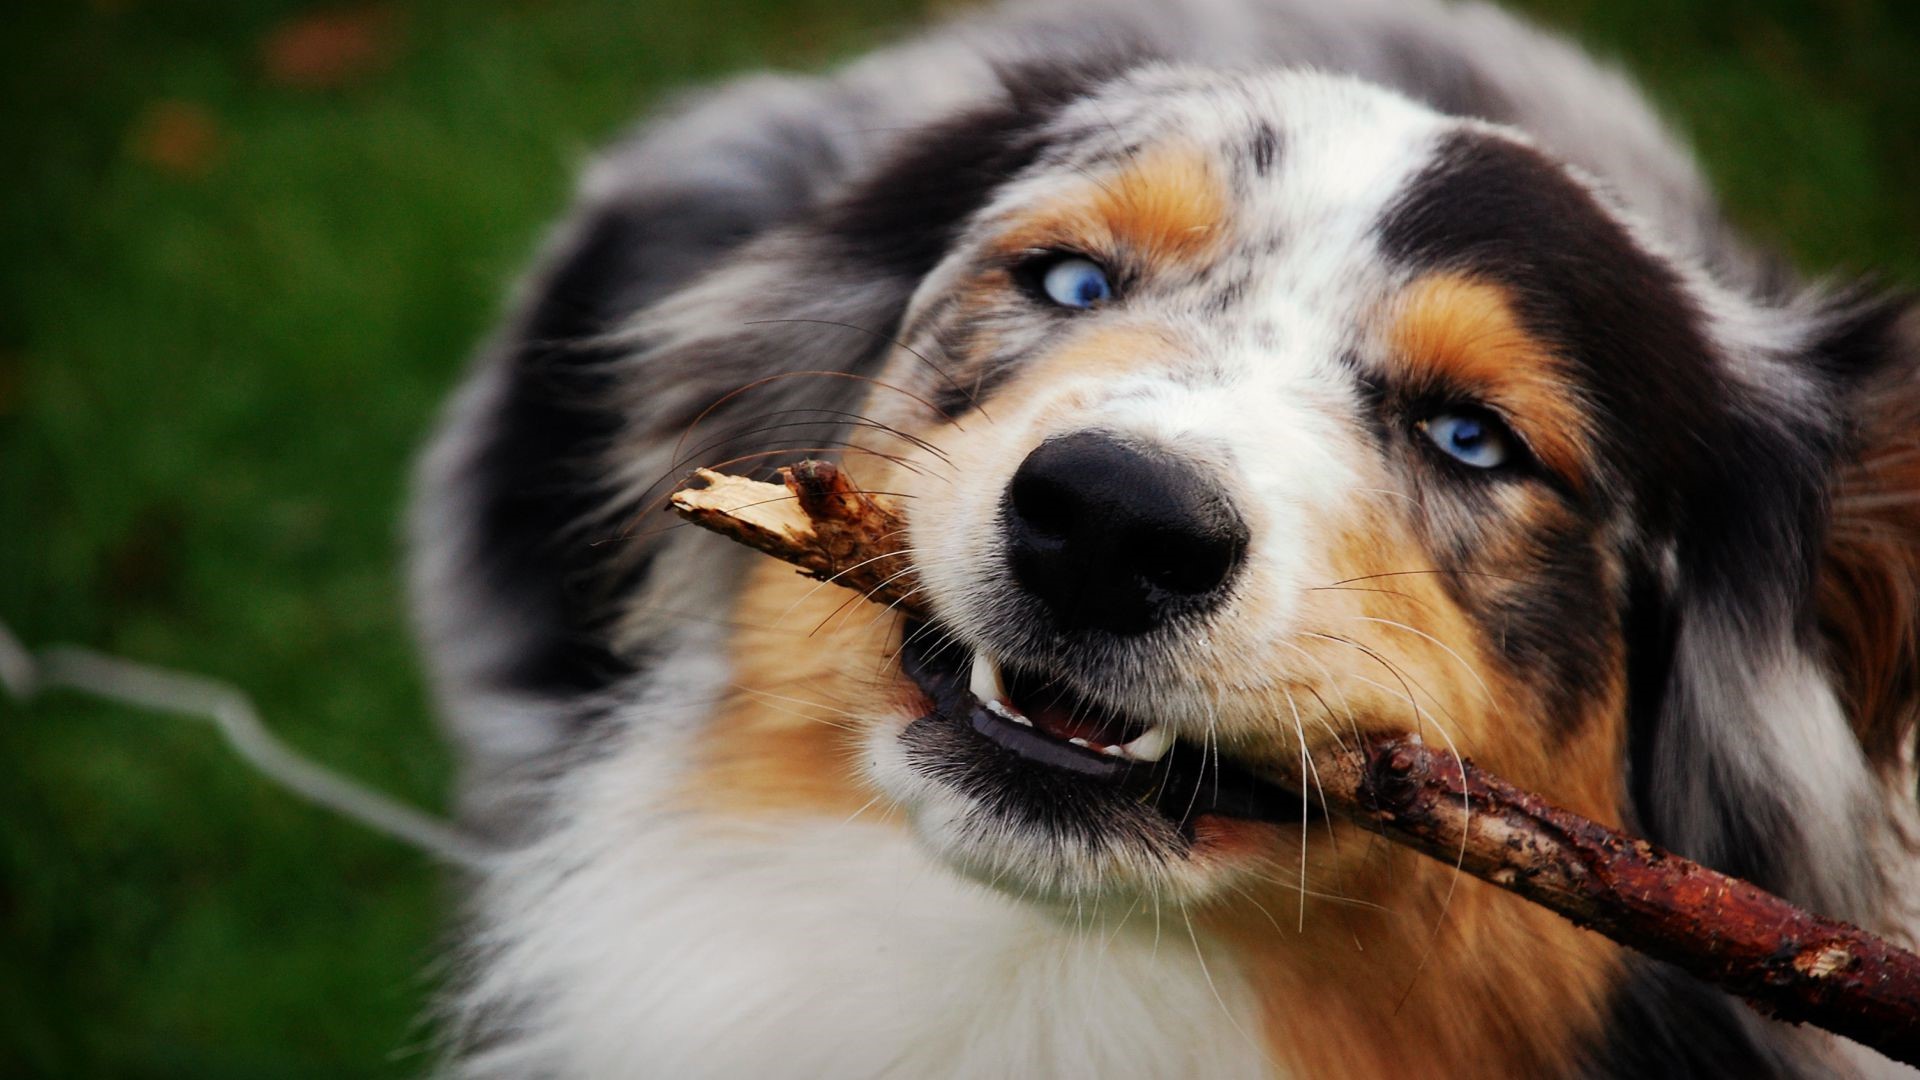 Tilfredsstille Fugtig neutral Caring for Your Australian Shepherd Dog – Exercise, Grooming and Food